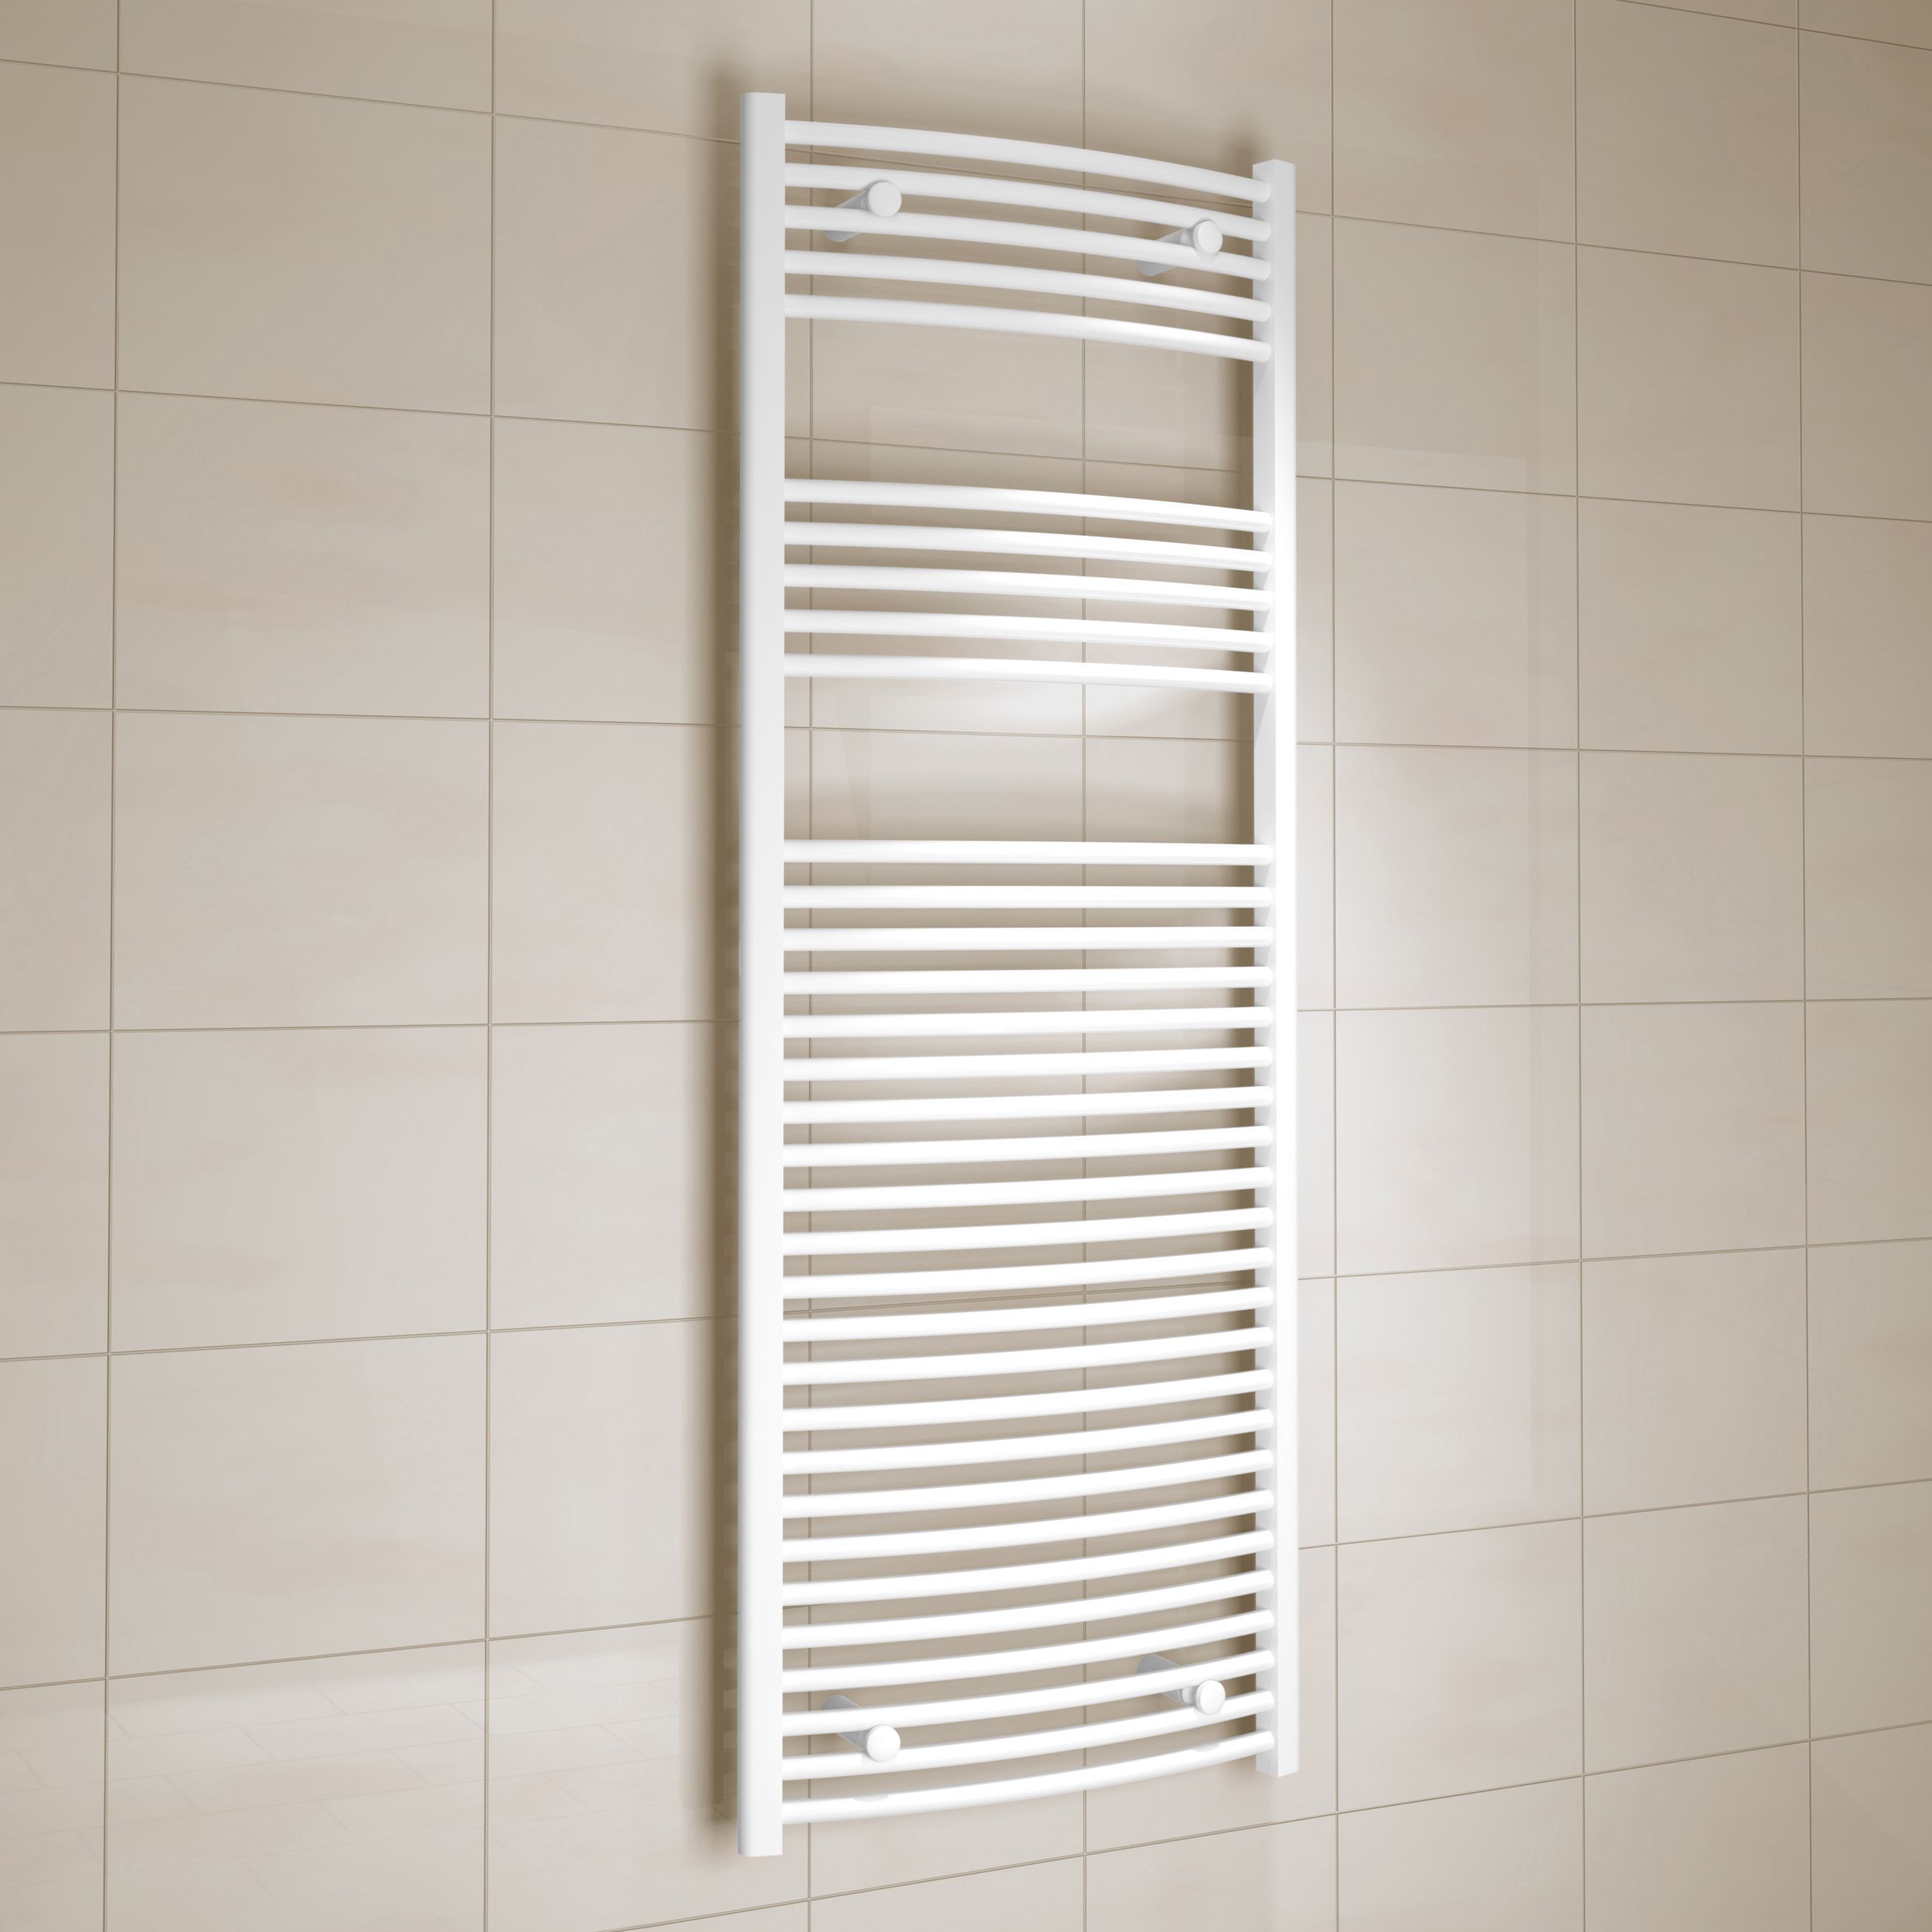 Kudox White Electric Towel warmer (W)600mm x (H)1600mm